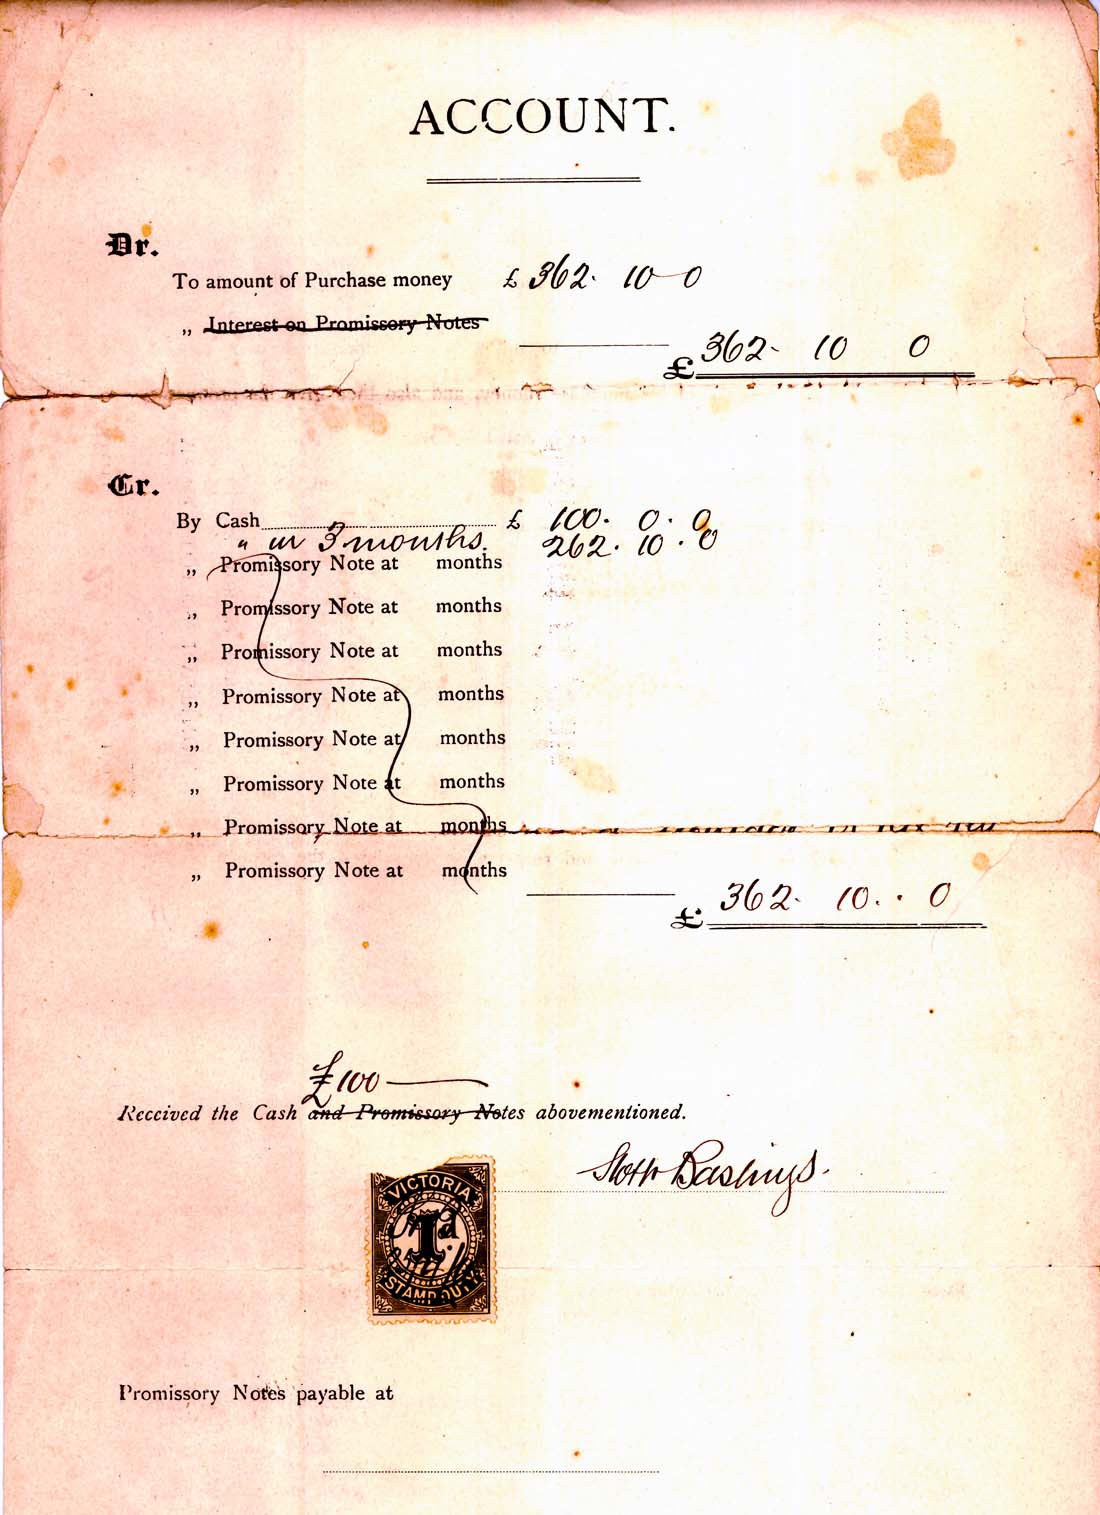 Transfer of land document from John Gay Roberts to Albert Sanguinetti